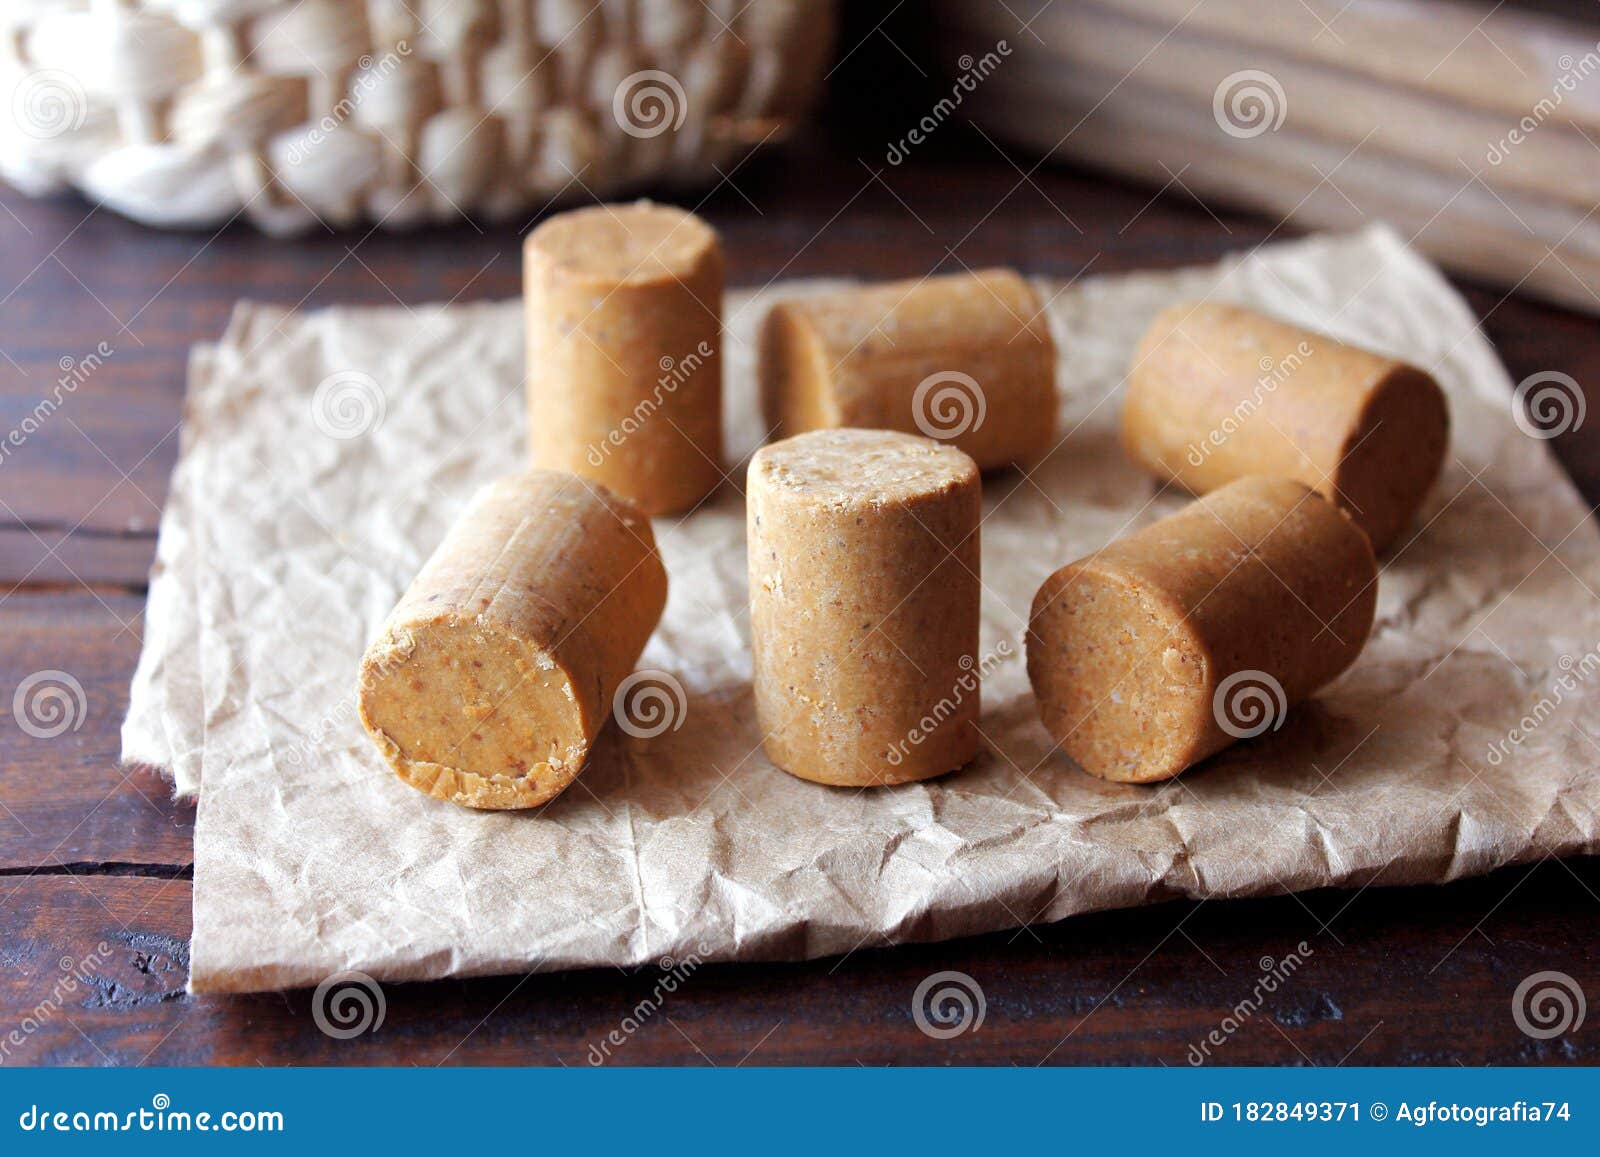 peanut candy paÃÂ§oca or pacoca traditional brazilian sweet based on peanuts, manioc flour and sugar on a rustic wooden table